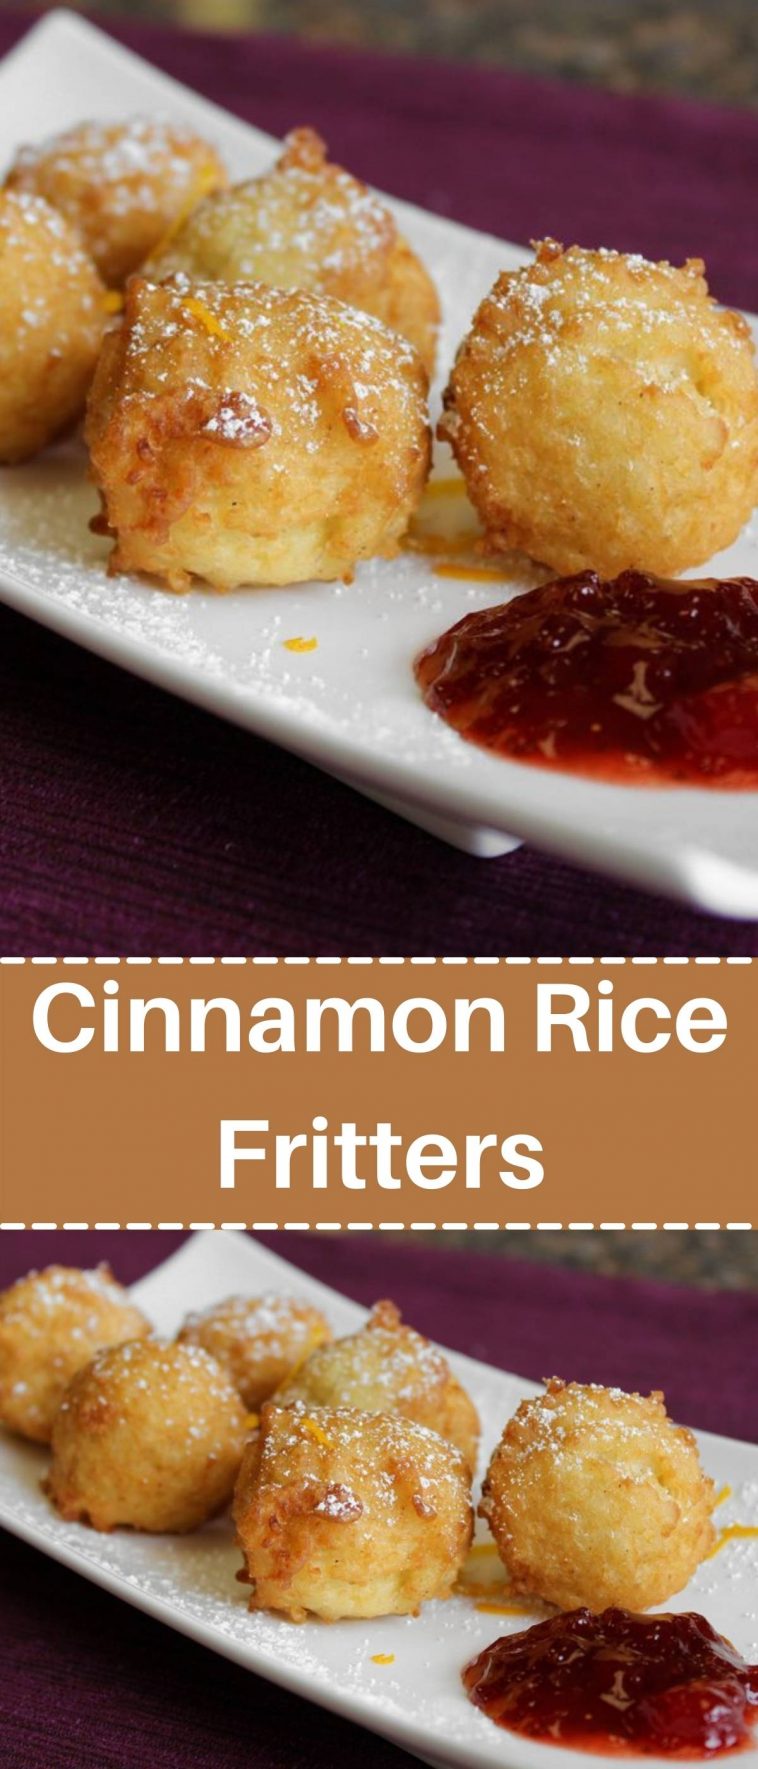 Cinnamon Rice Fritters